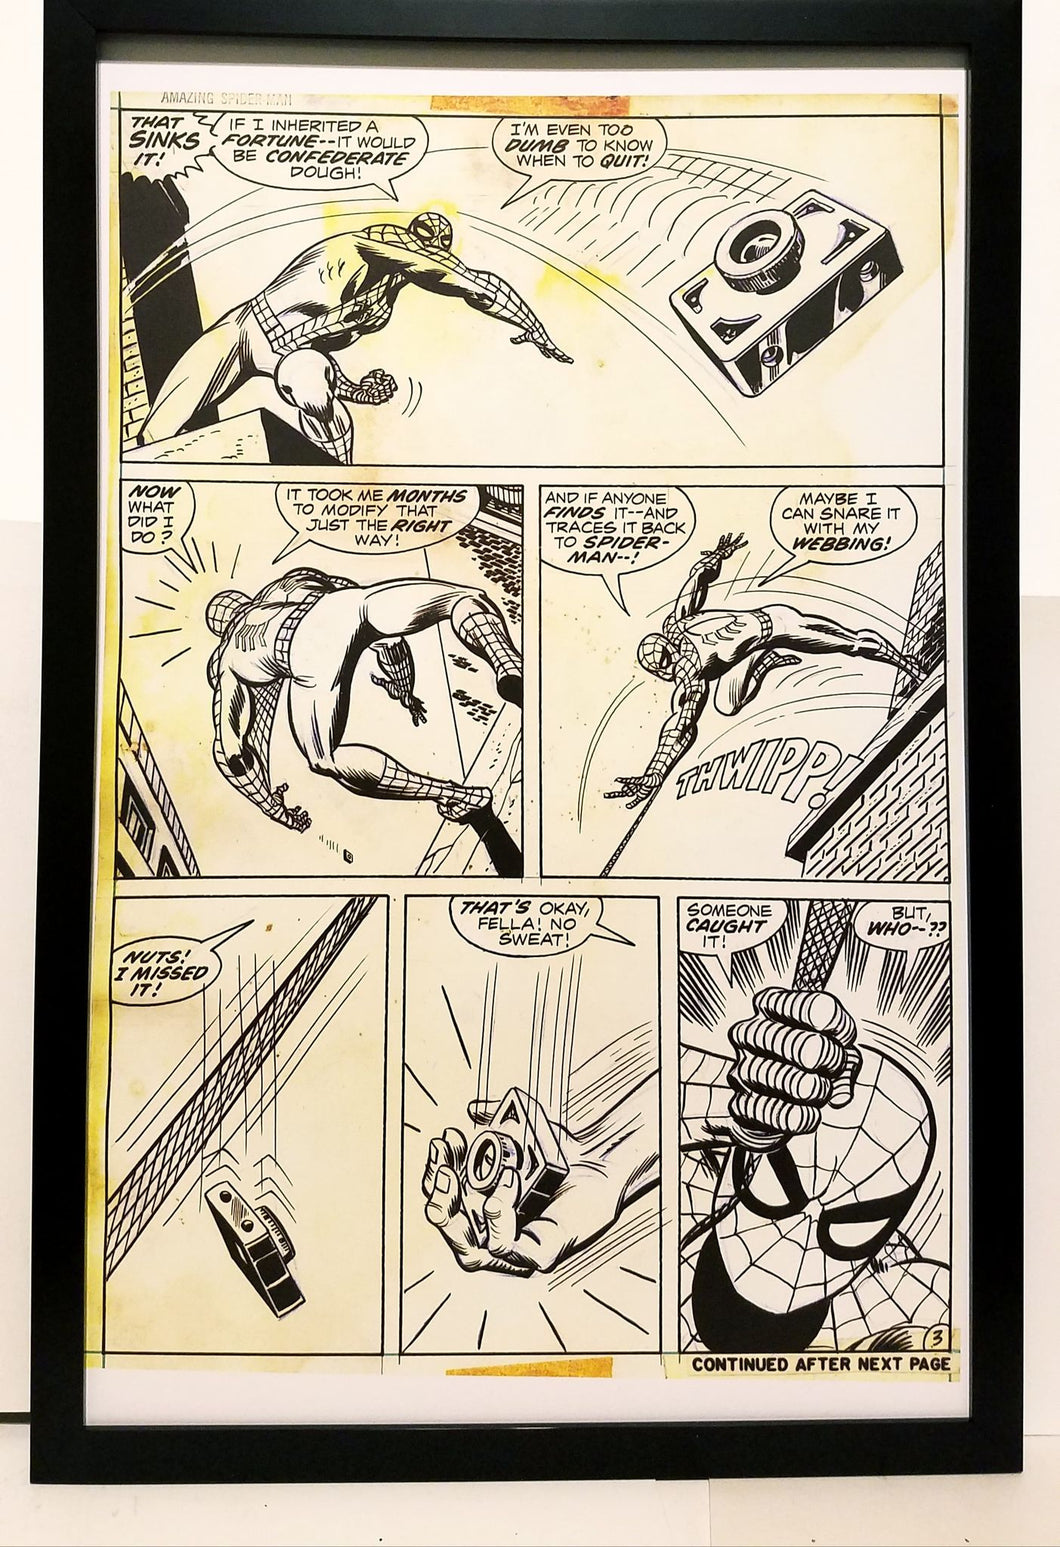 Amazing Spider-Man #110 pg. 3 John Romita 11x17 FRAMED Original Art Poster Marvel Comics